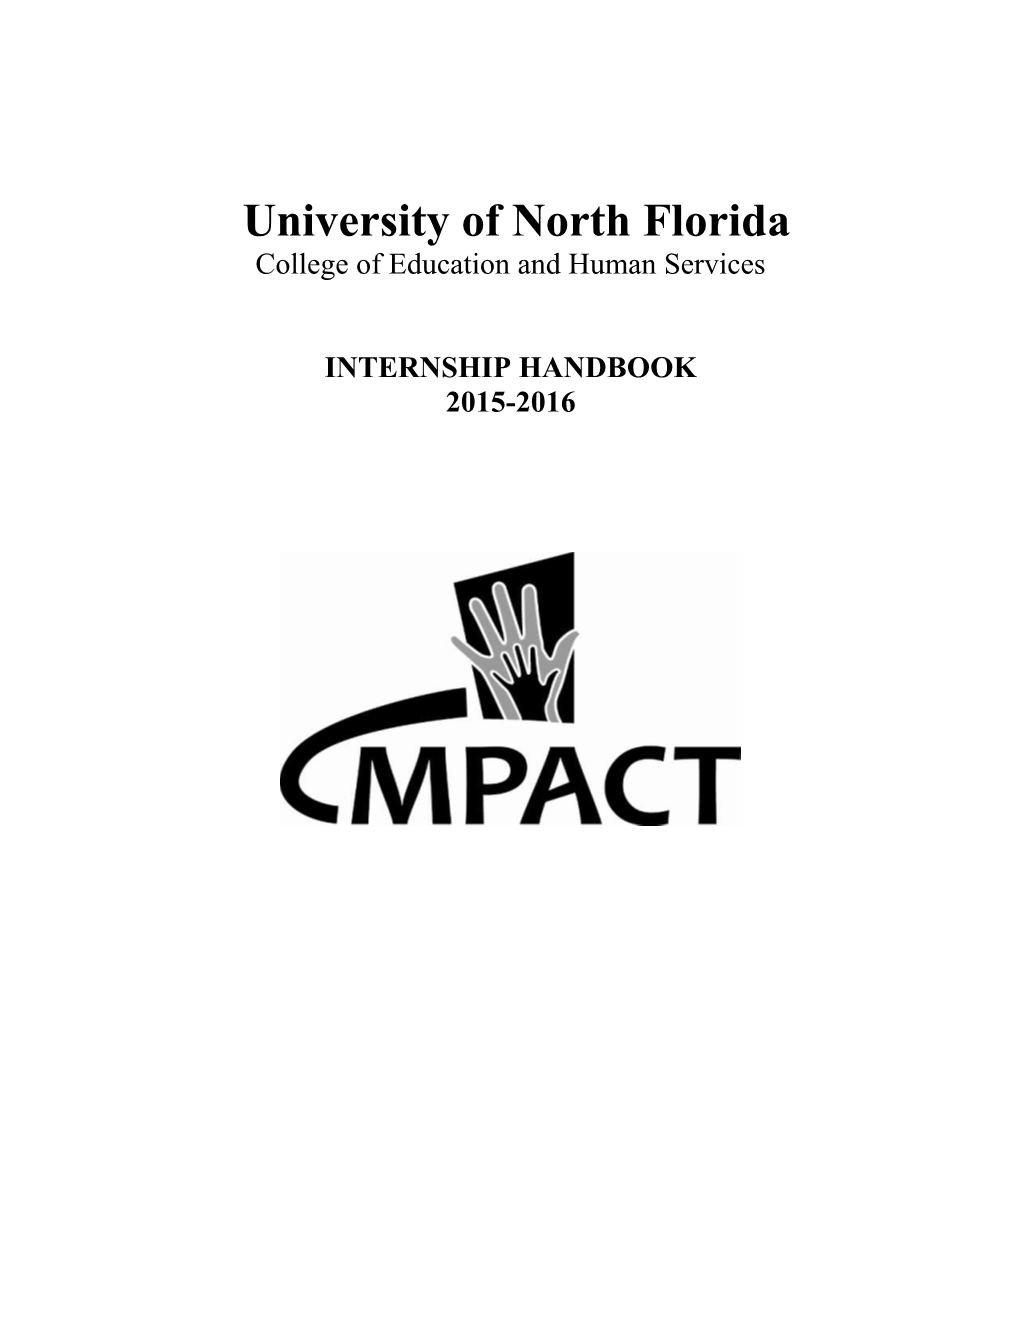 University of North Florida s1